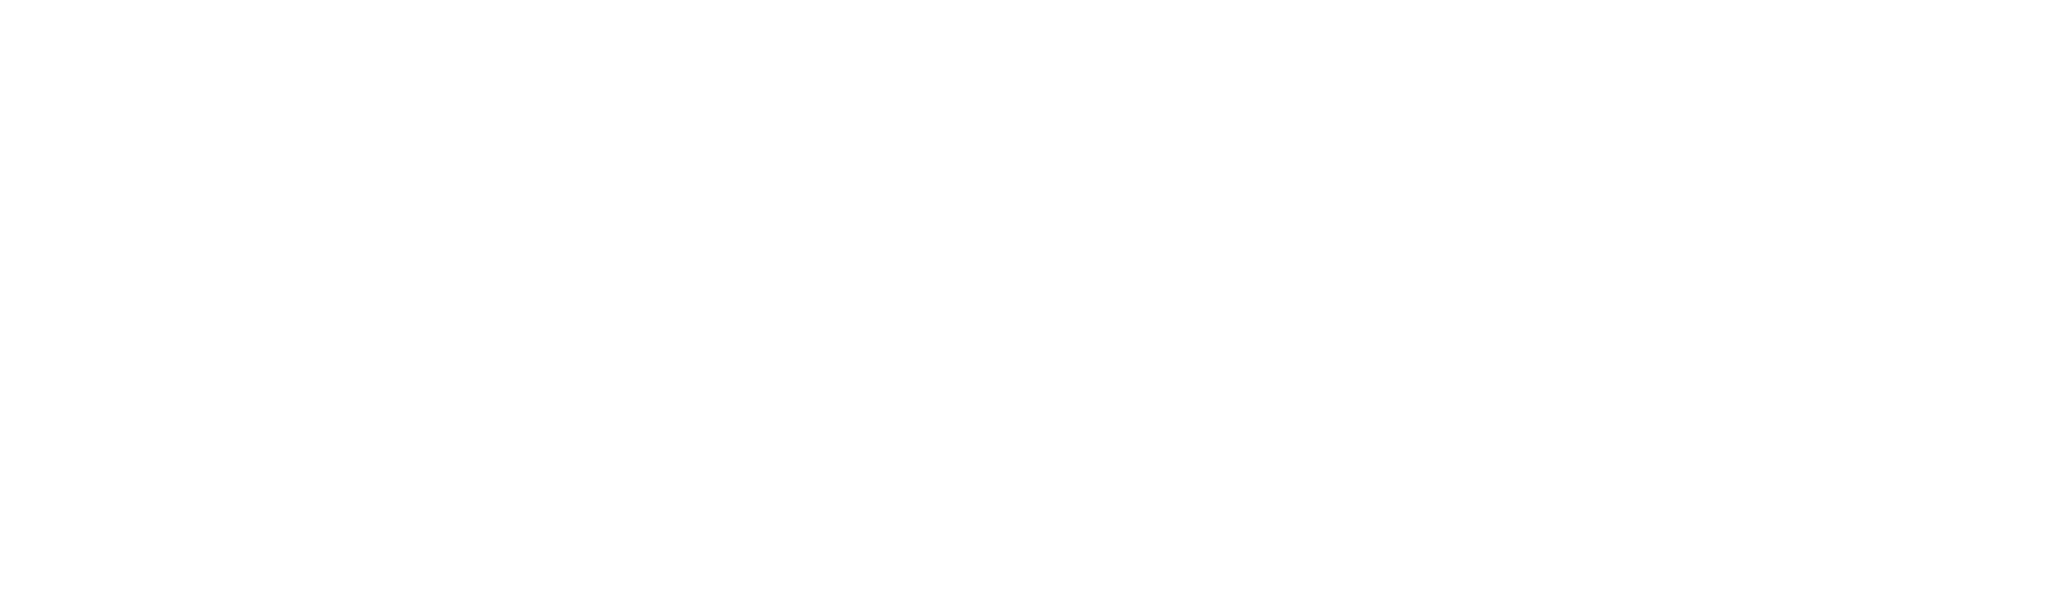 american eagle x mean girls